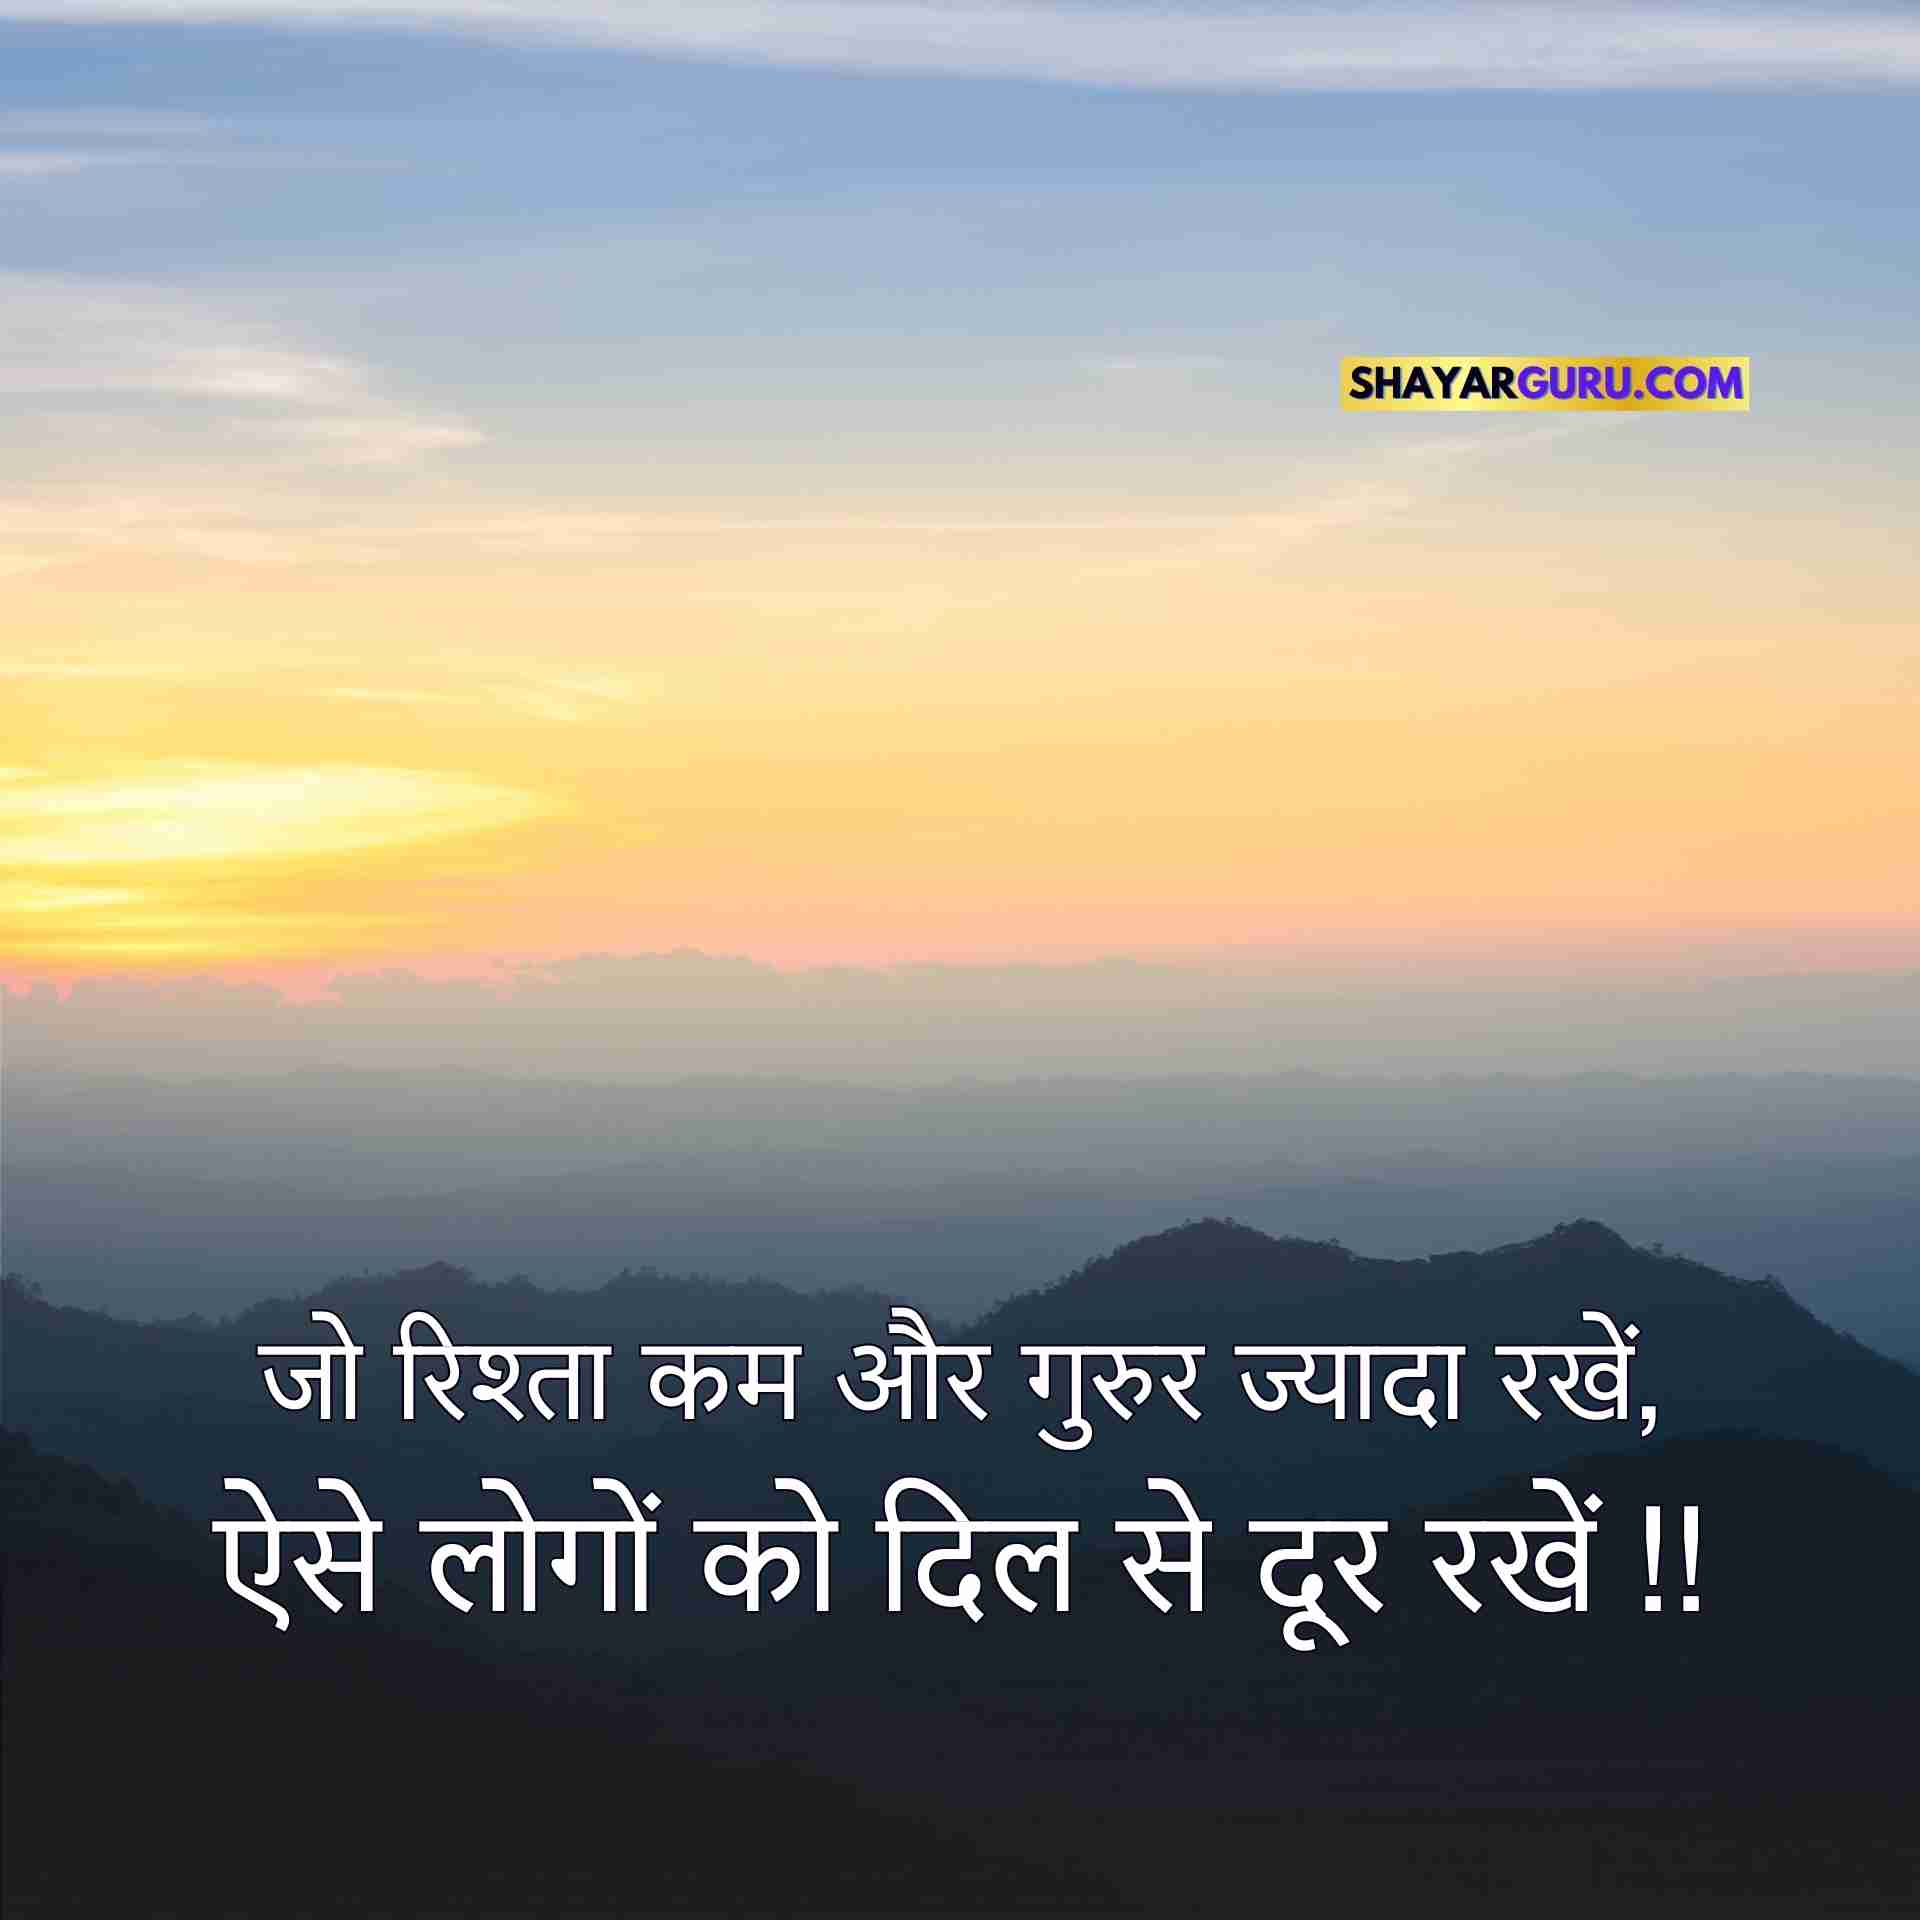 Sachi Bate Qoutes in Hindi Image